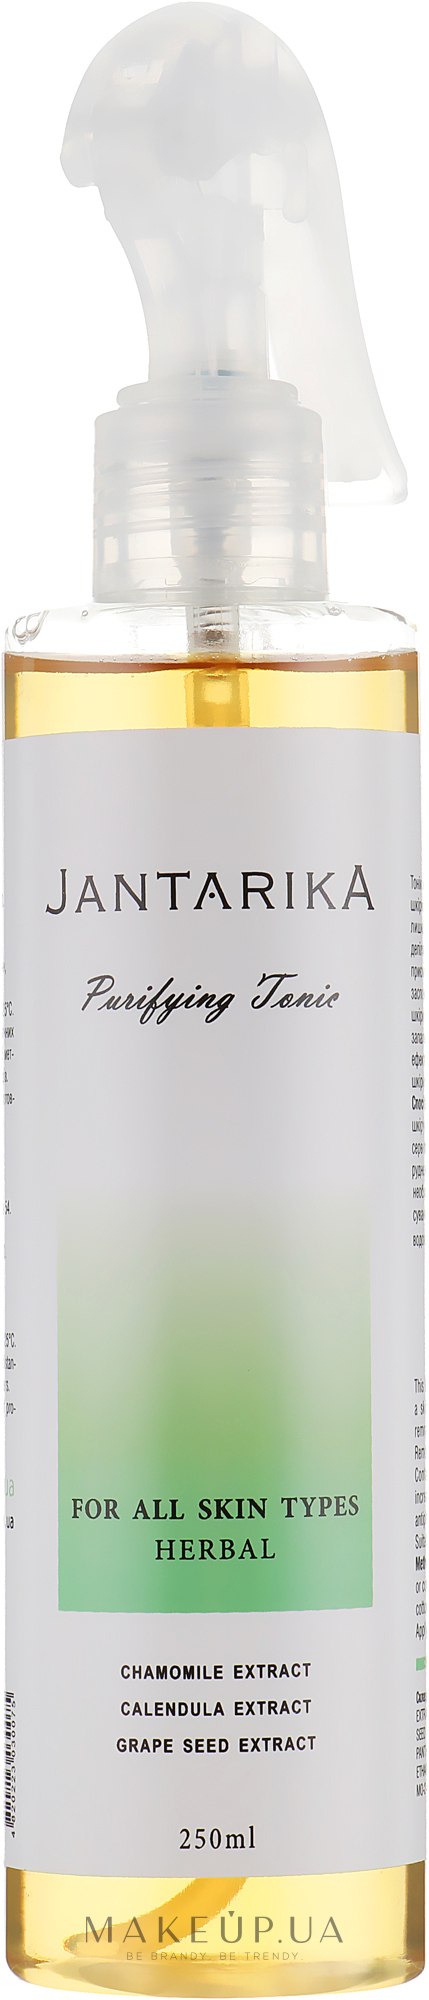 Тоник очищающий "Травы" - JantarikA Purifying Tonic Herbal  — фото 250ml